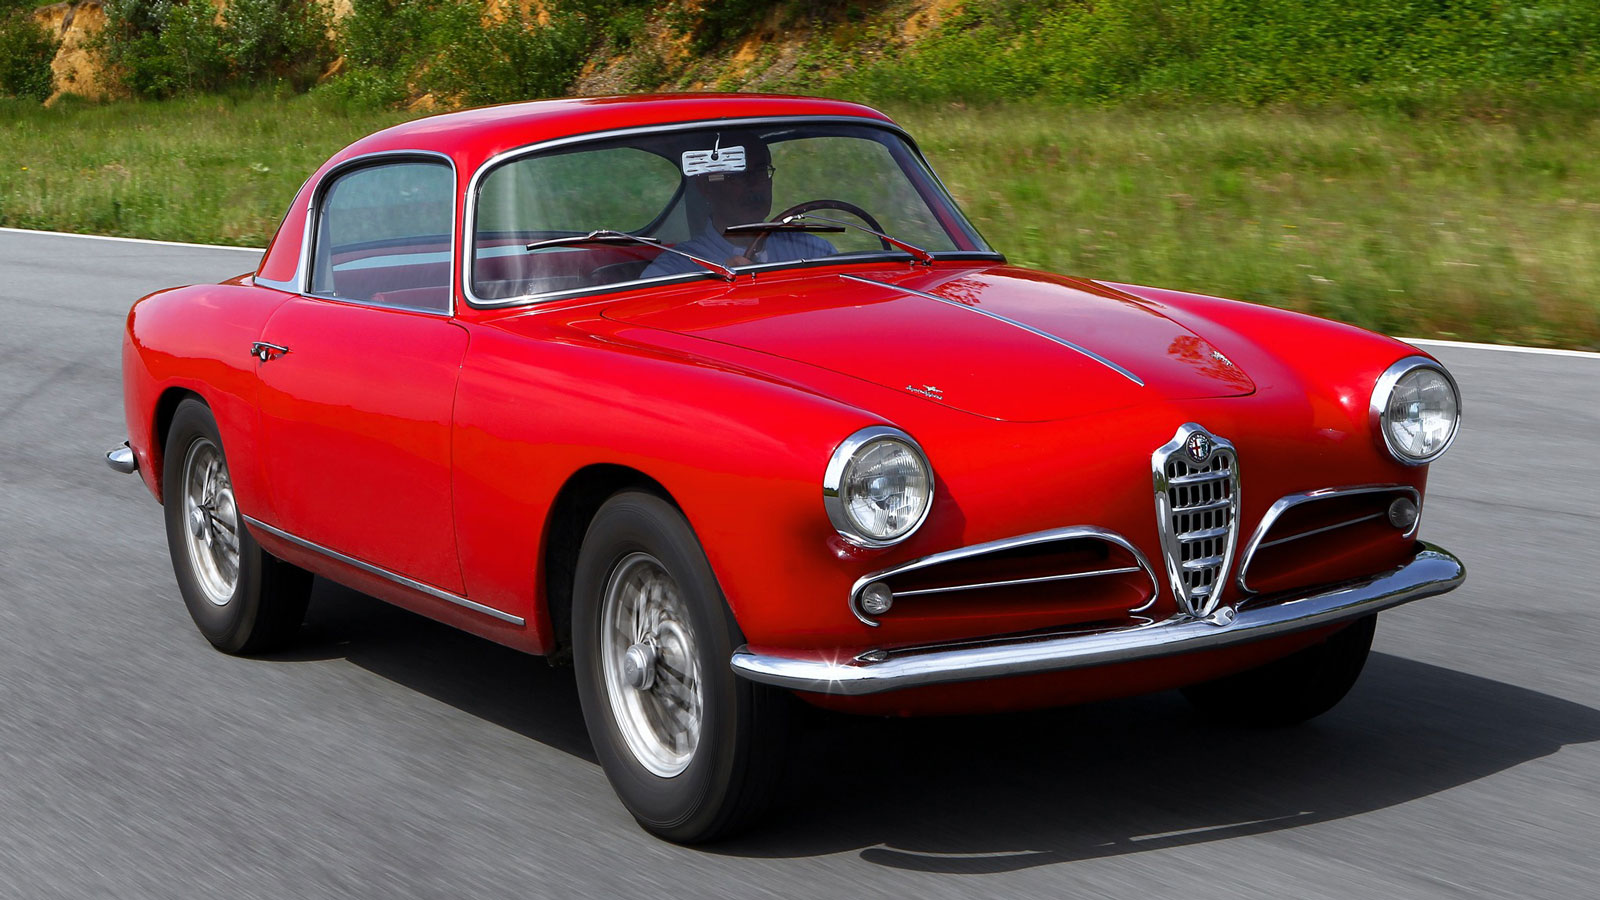 H Alfa Romeo κατακτά τα γερμανικά Motor Klassik Awards